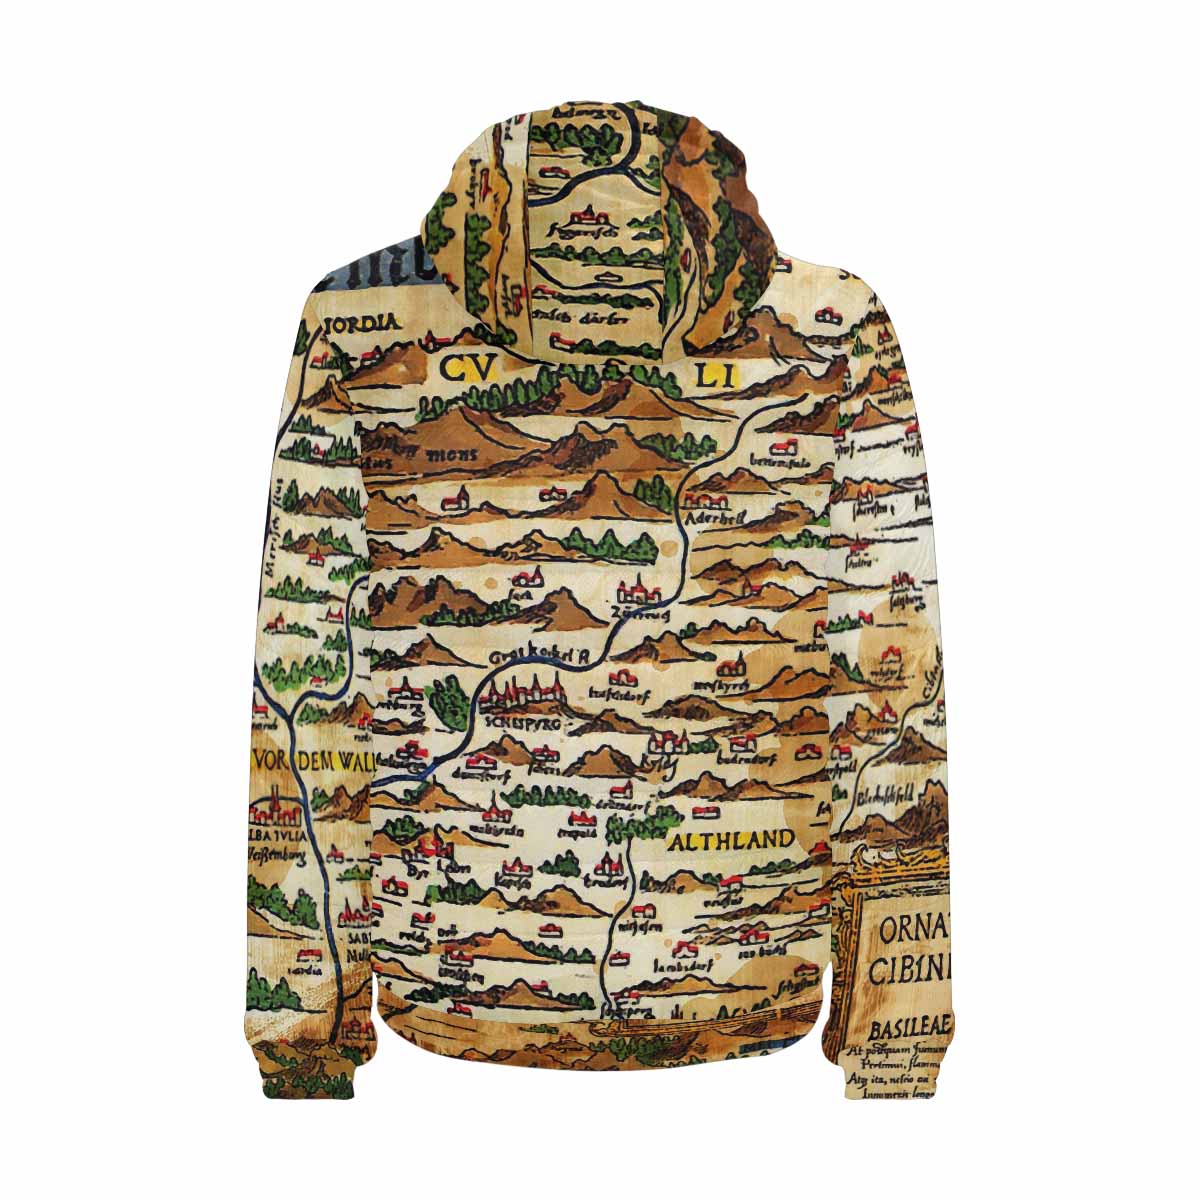 Antique Map design, mens lightweight, warm, quilted hooded bomber jacket, design, 48